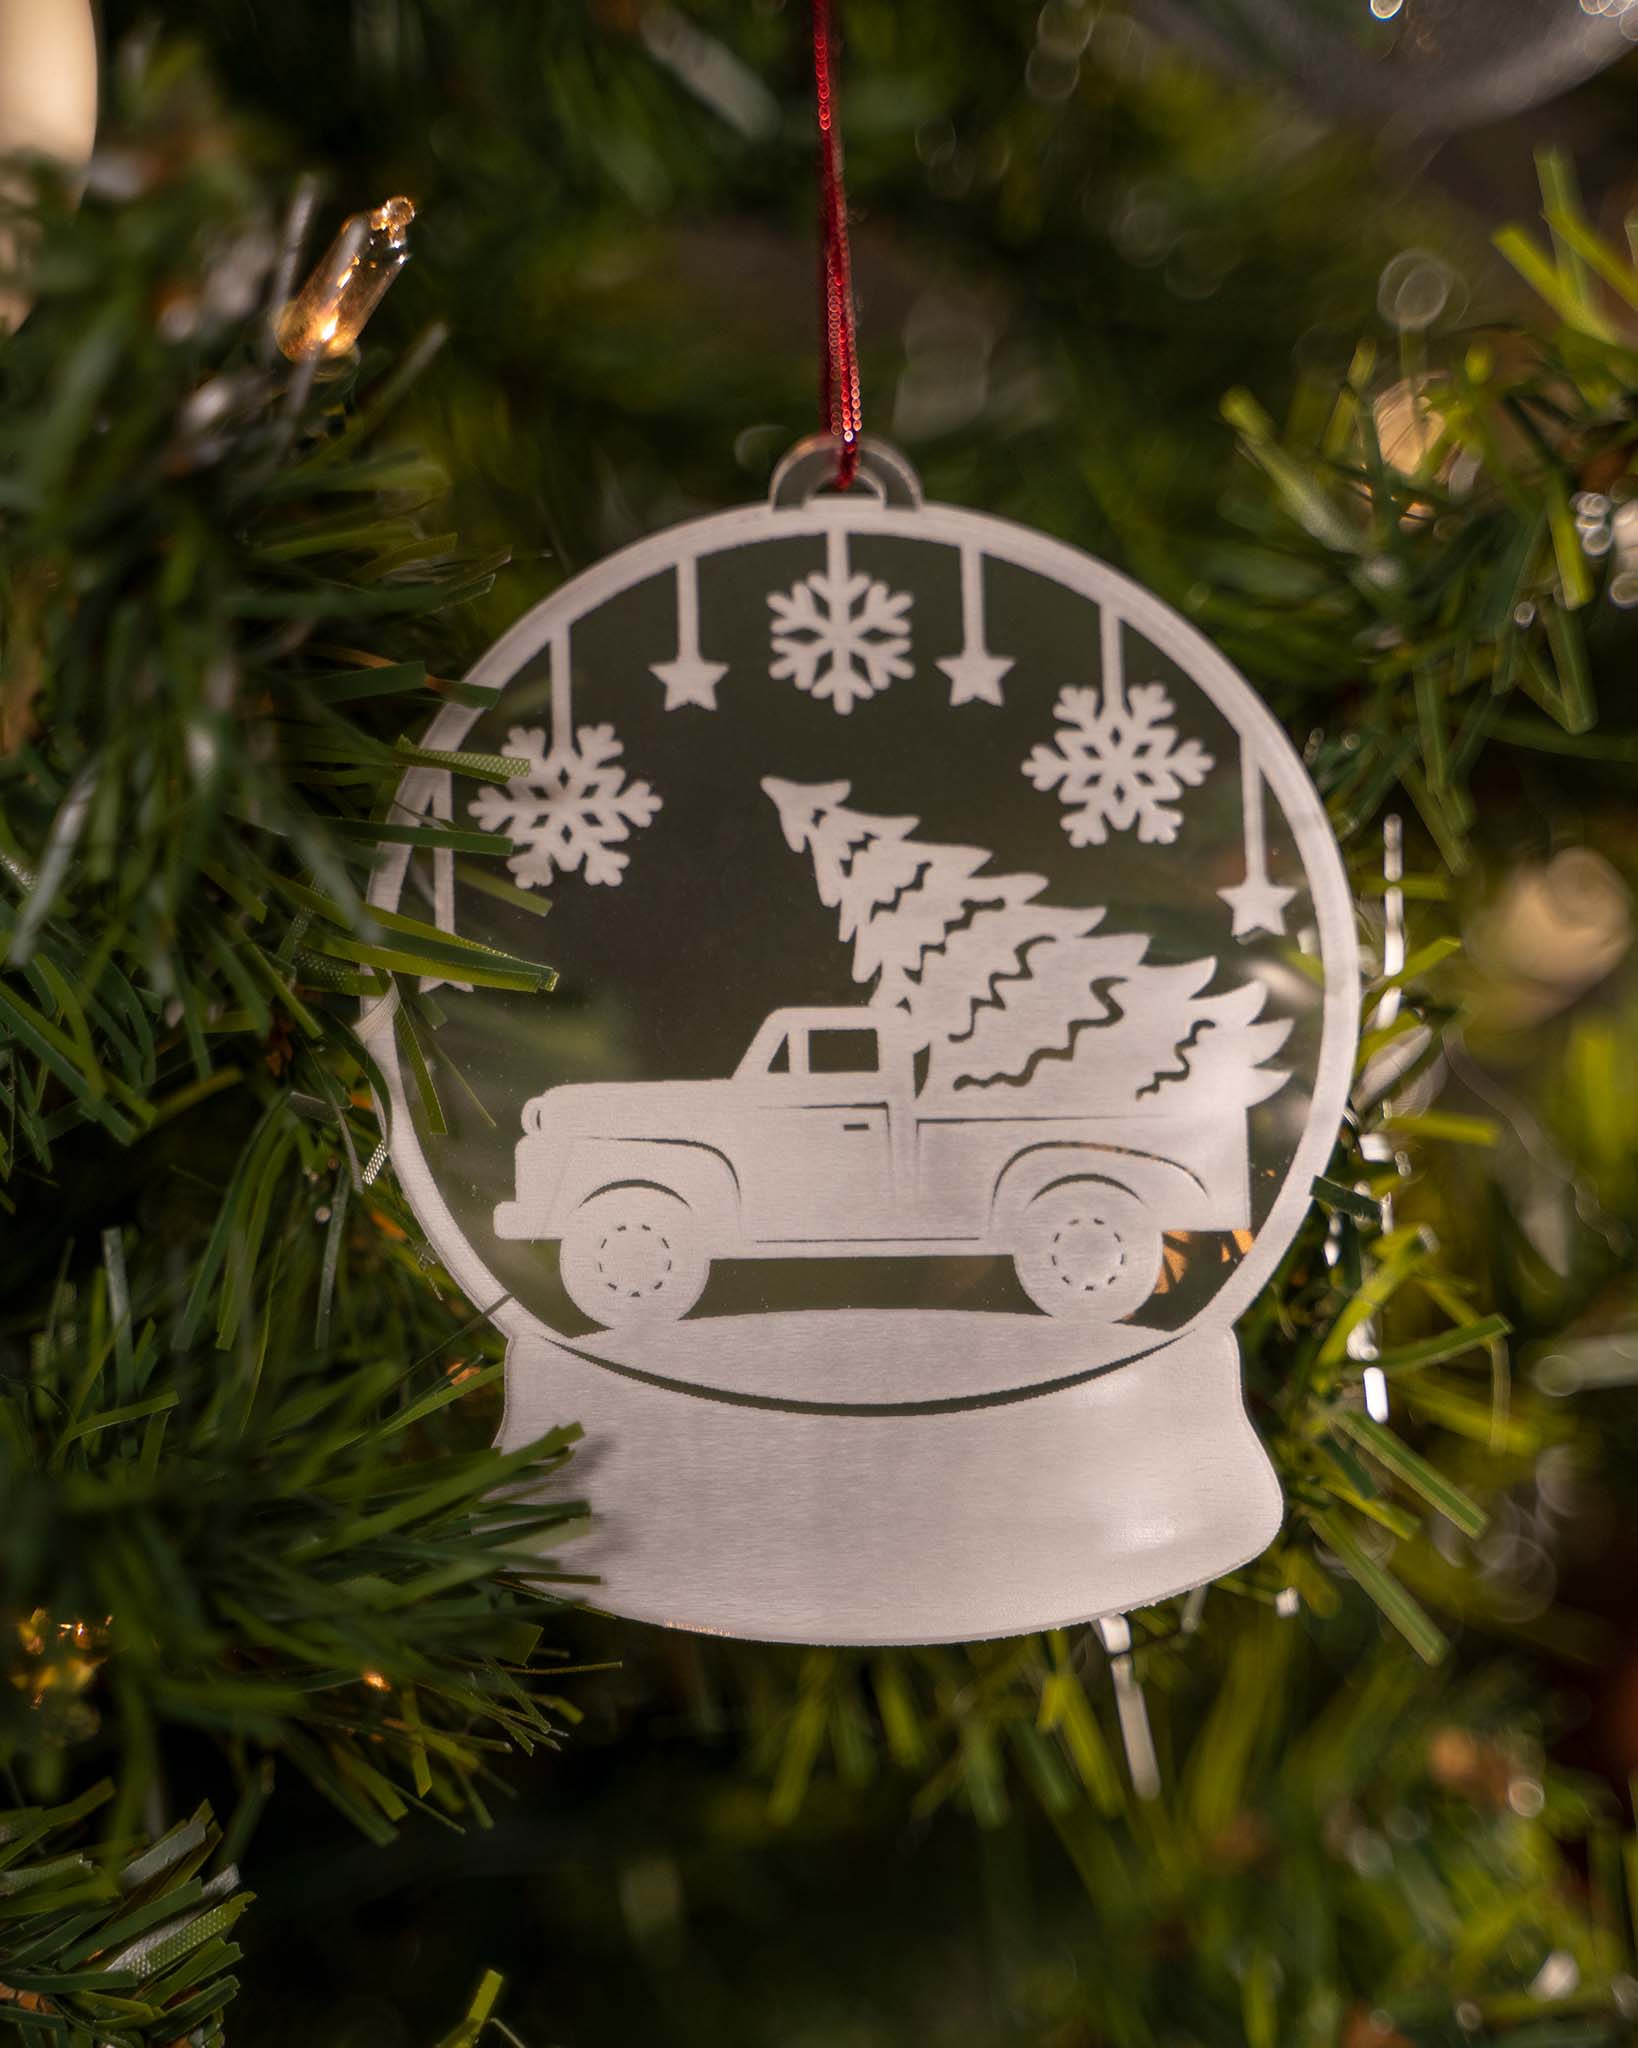 Truck with Tree Snow Globe Ornament